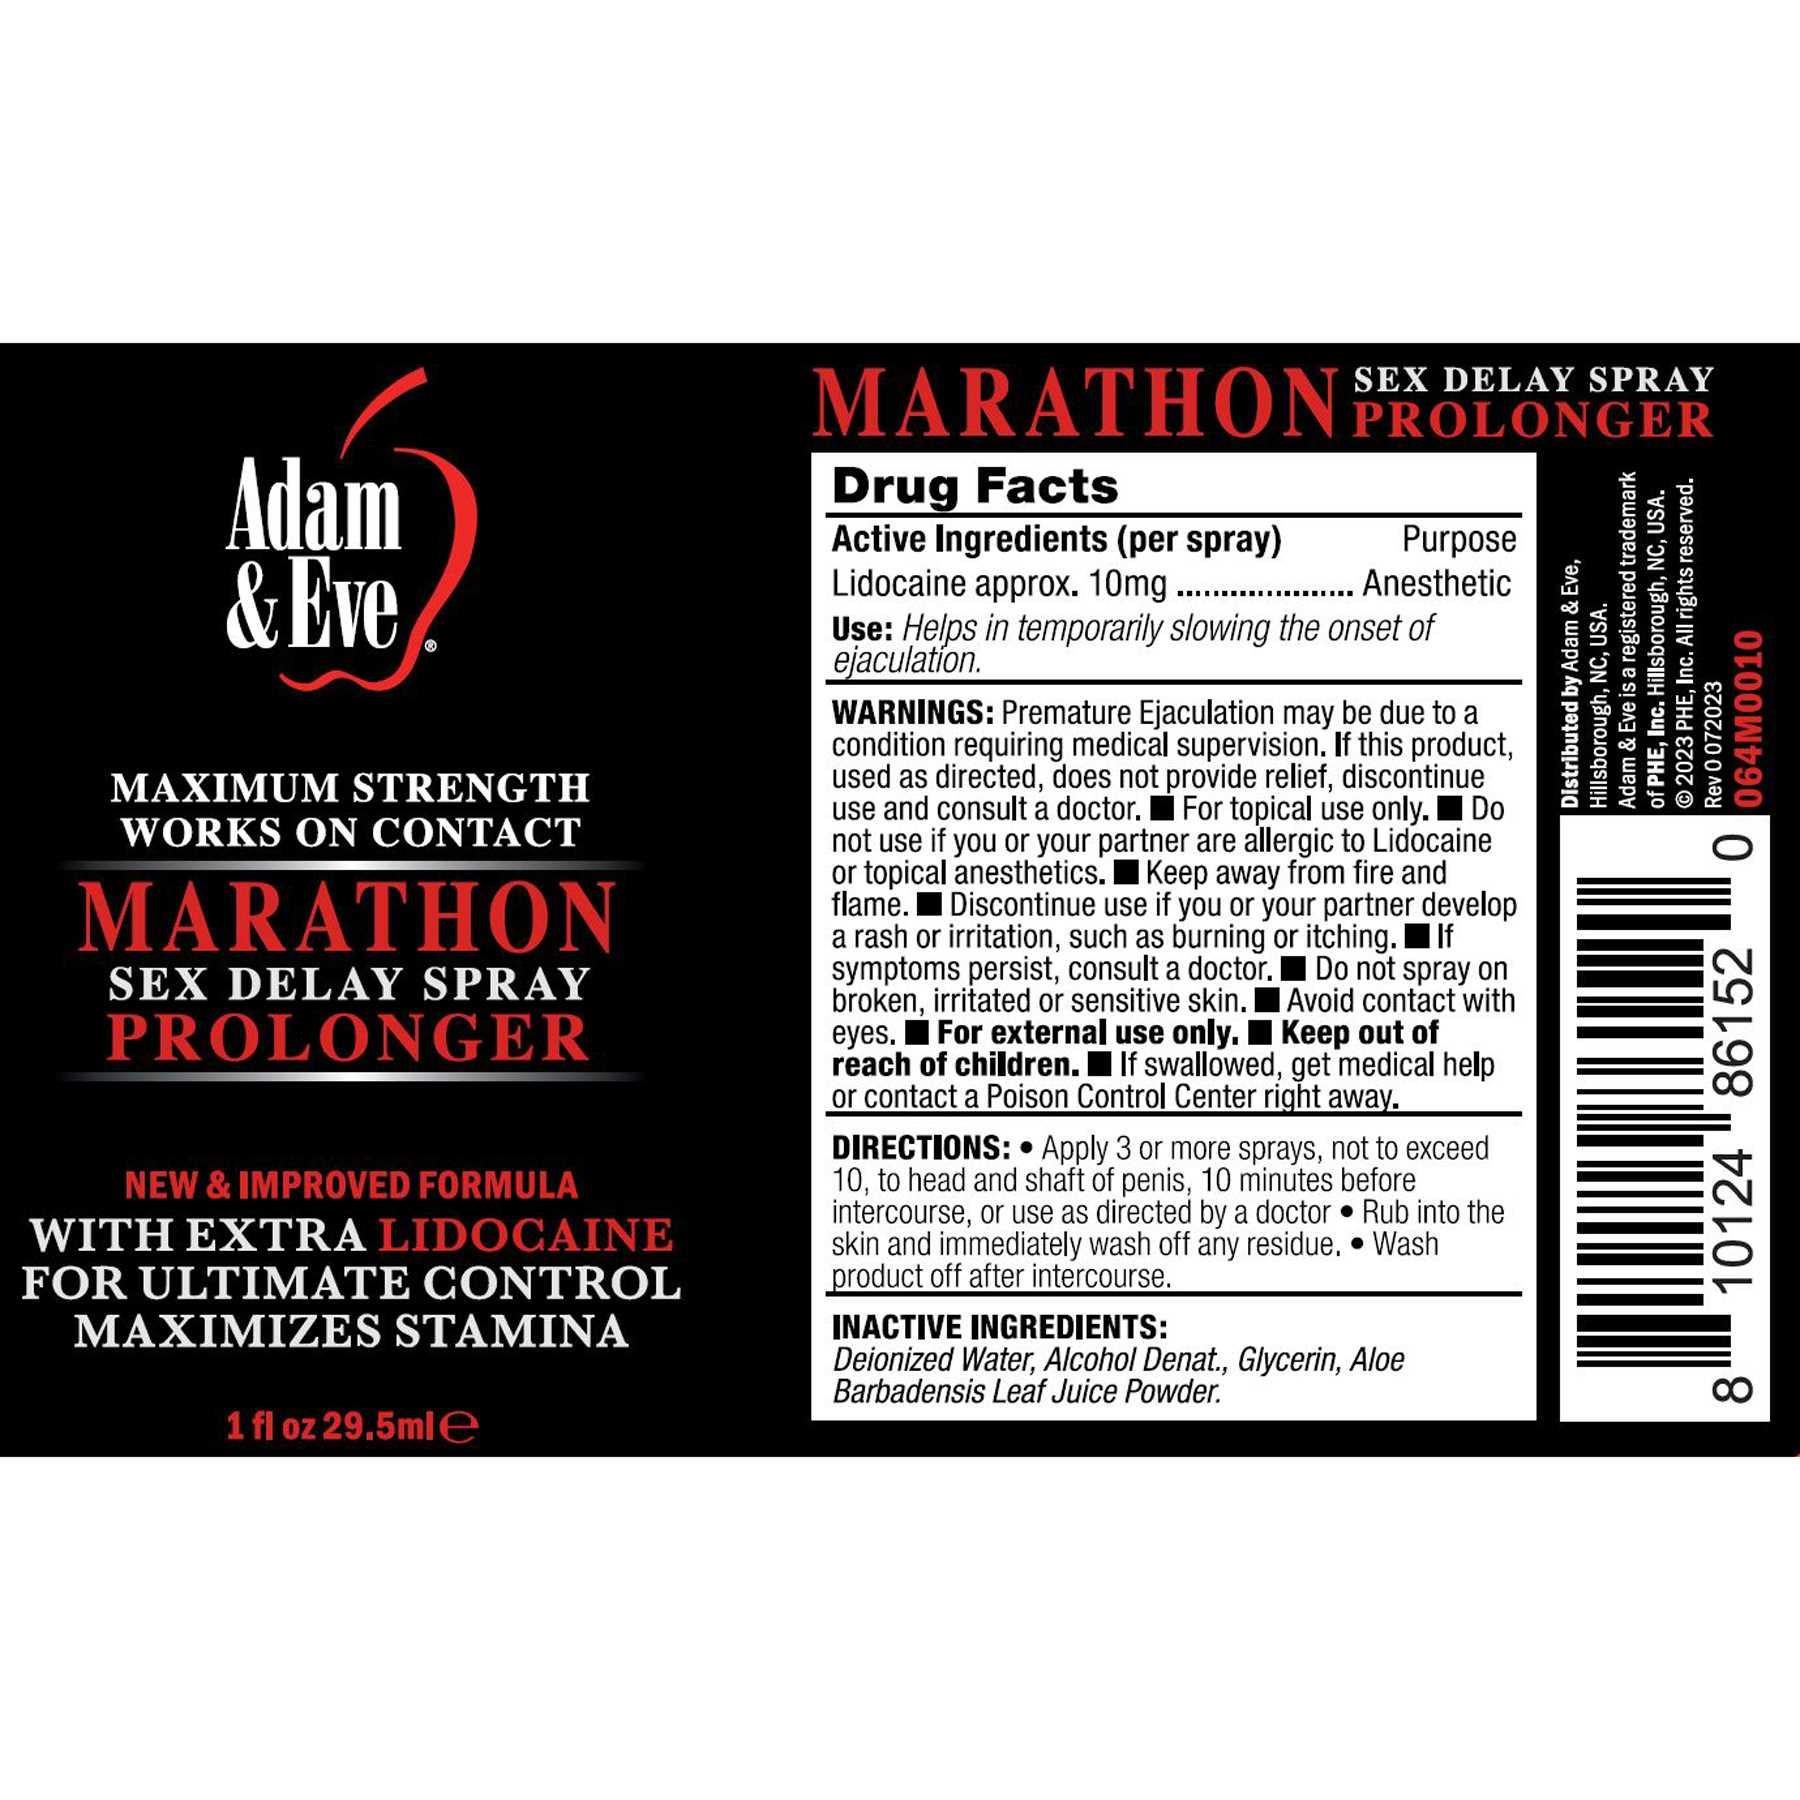 Adam & Eve Extra Strength Marathon Delay Spray label